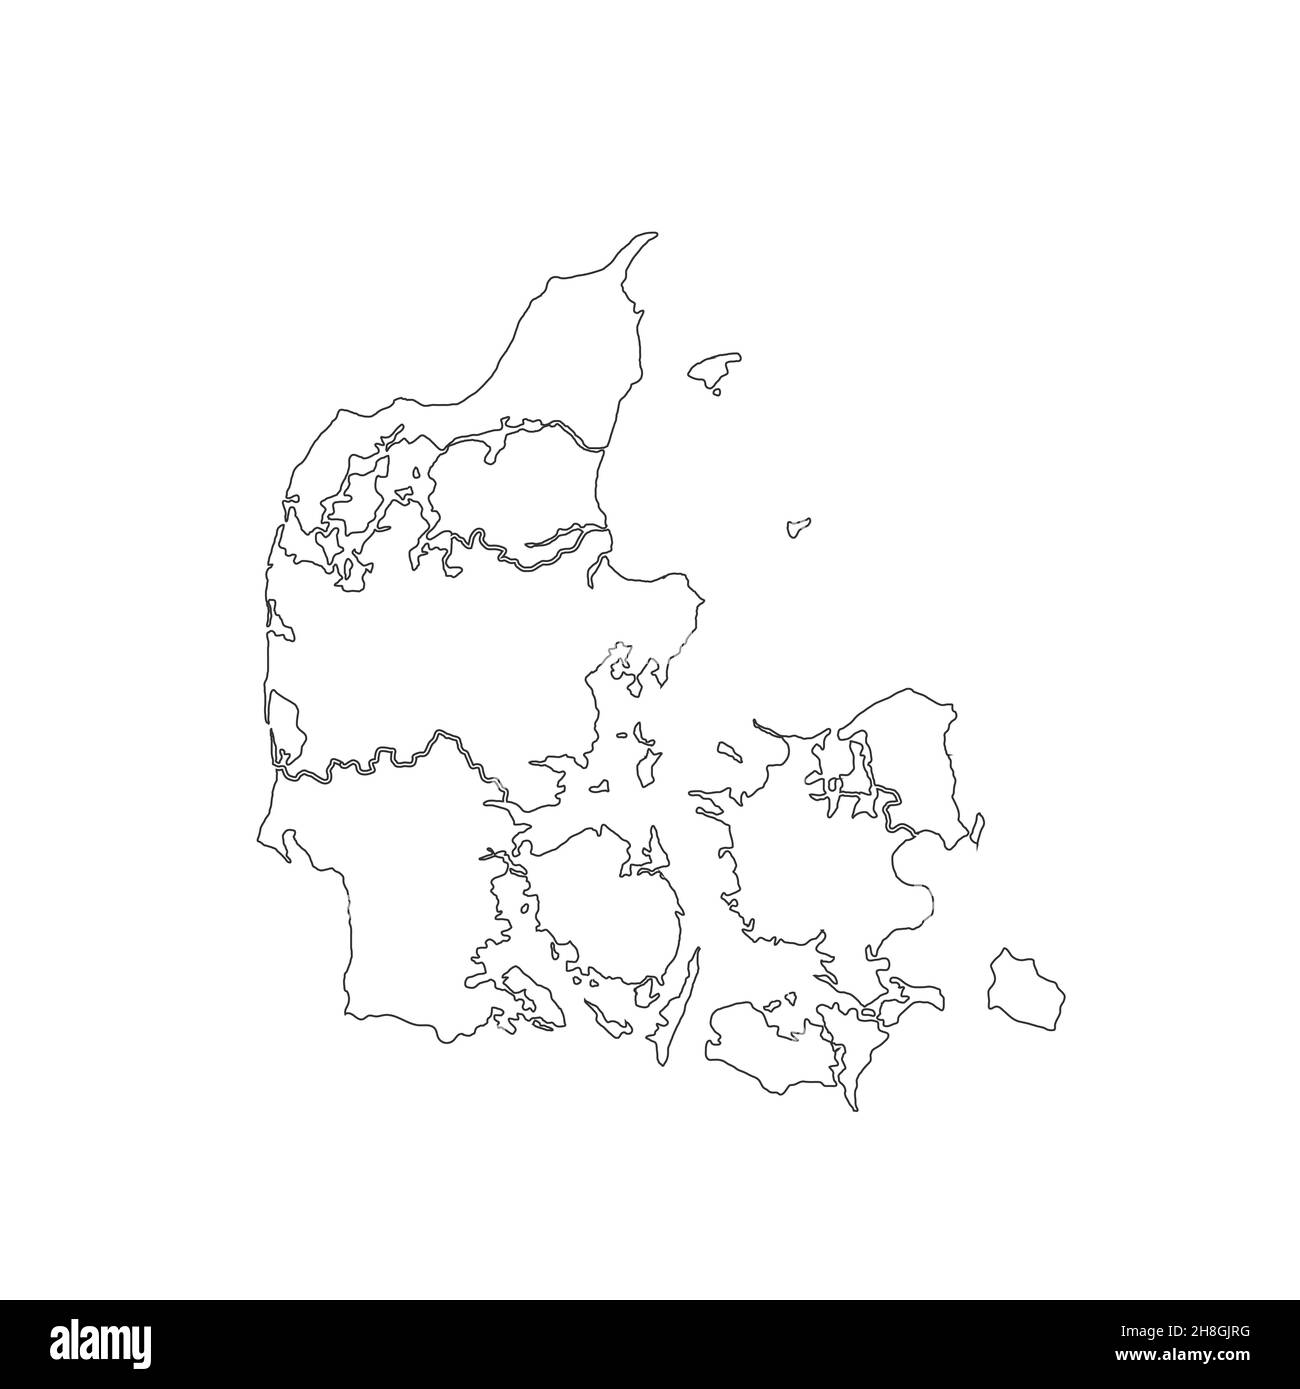 Denmark map using black border on white background Stock Photo - Alamy